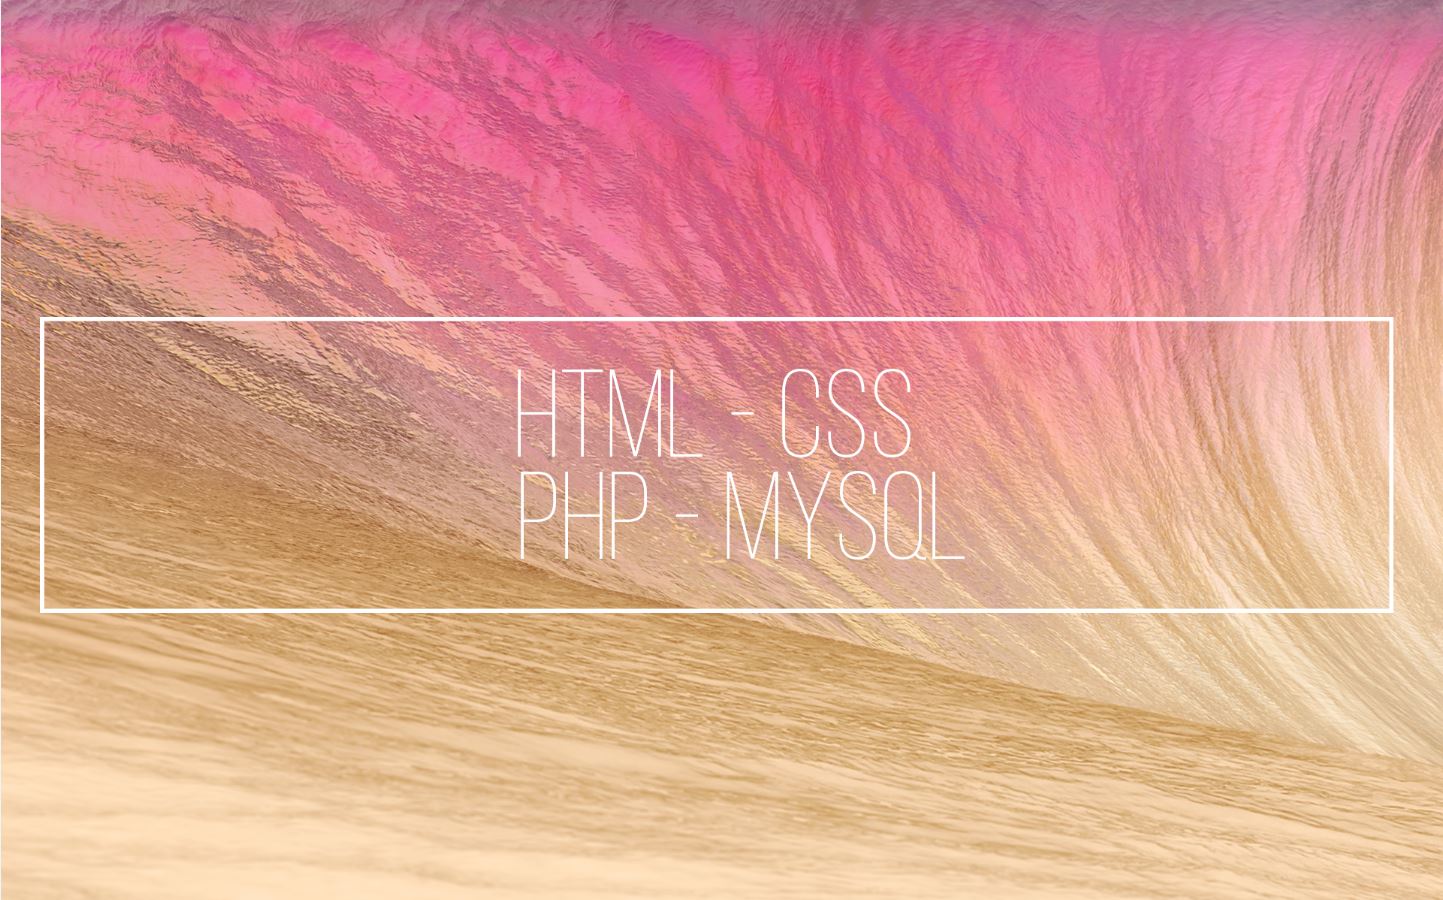 html-css-php-mysql-1